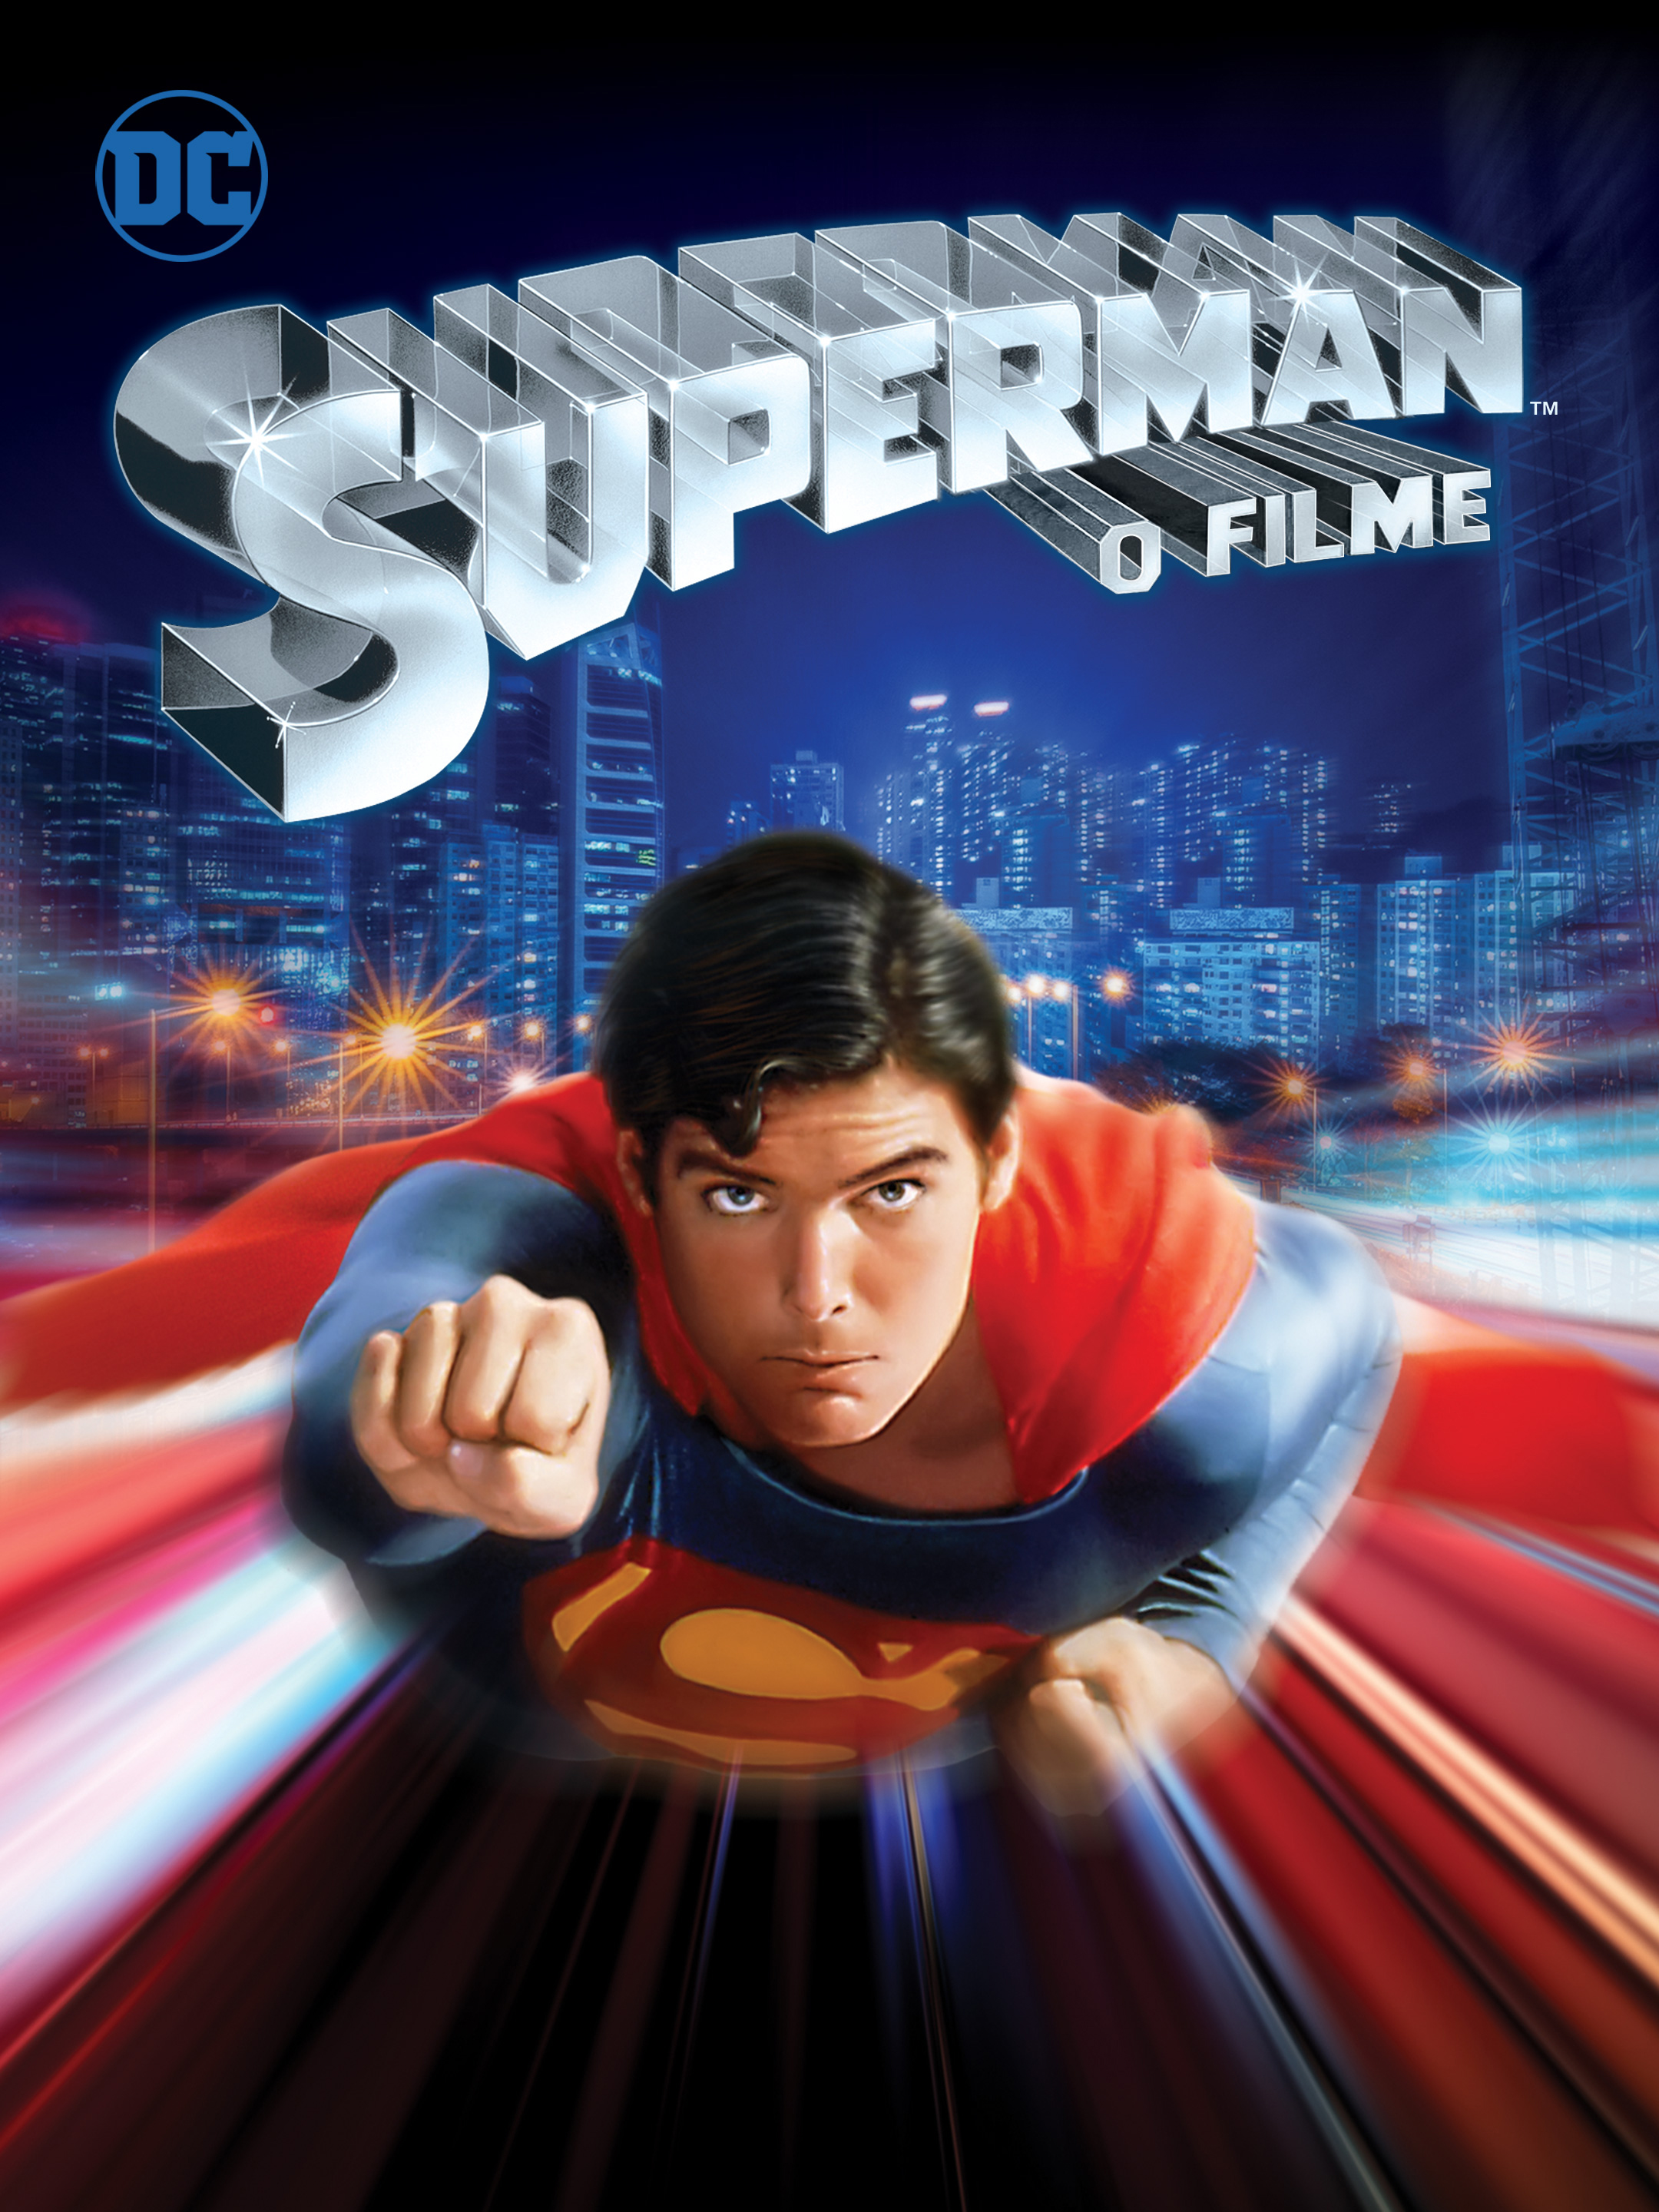 Casa do Capita: Resenha Filme: Superman II - A Aventura Continua